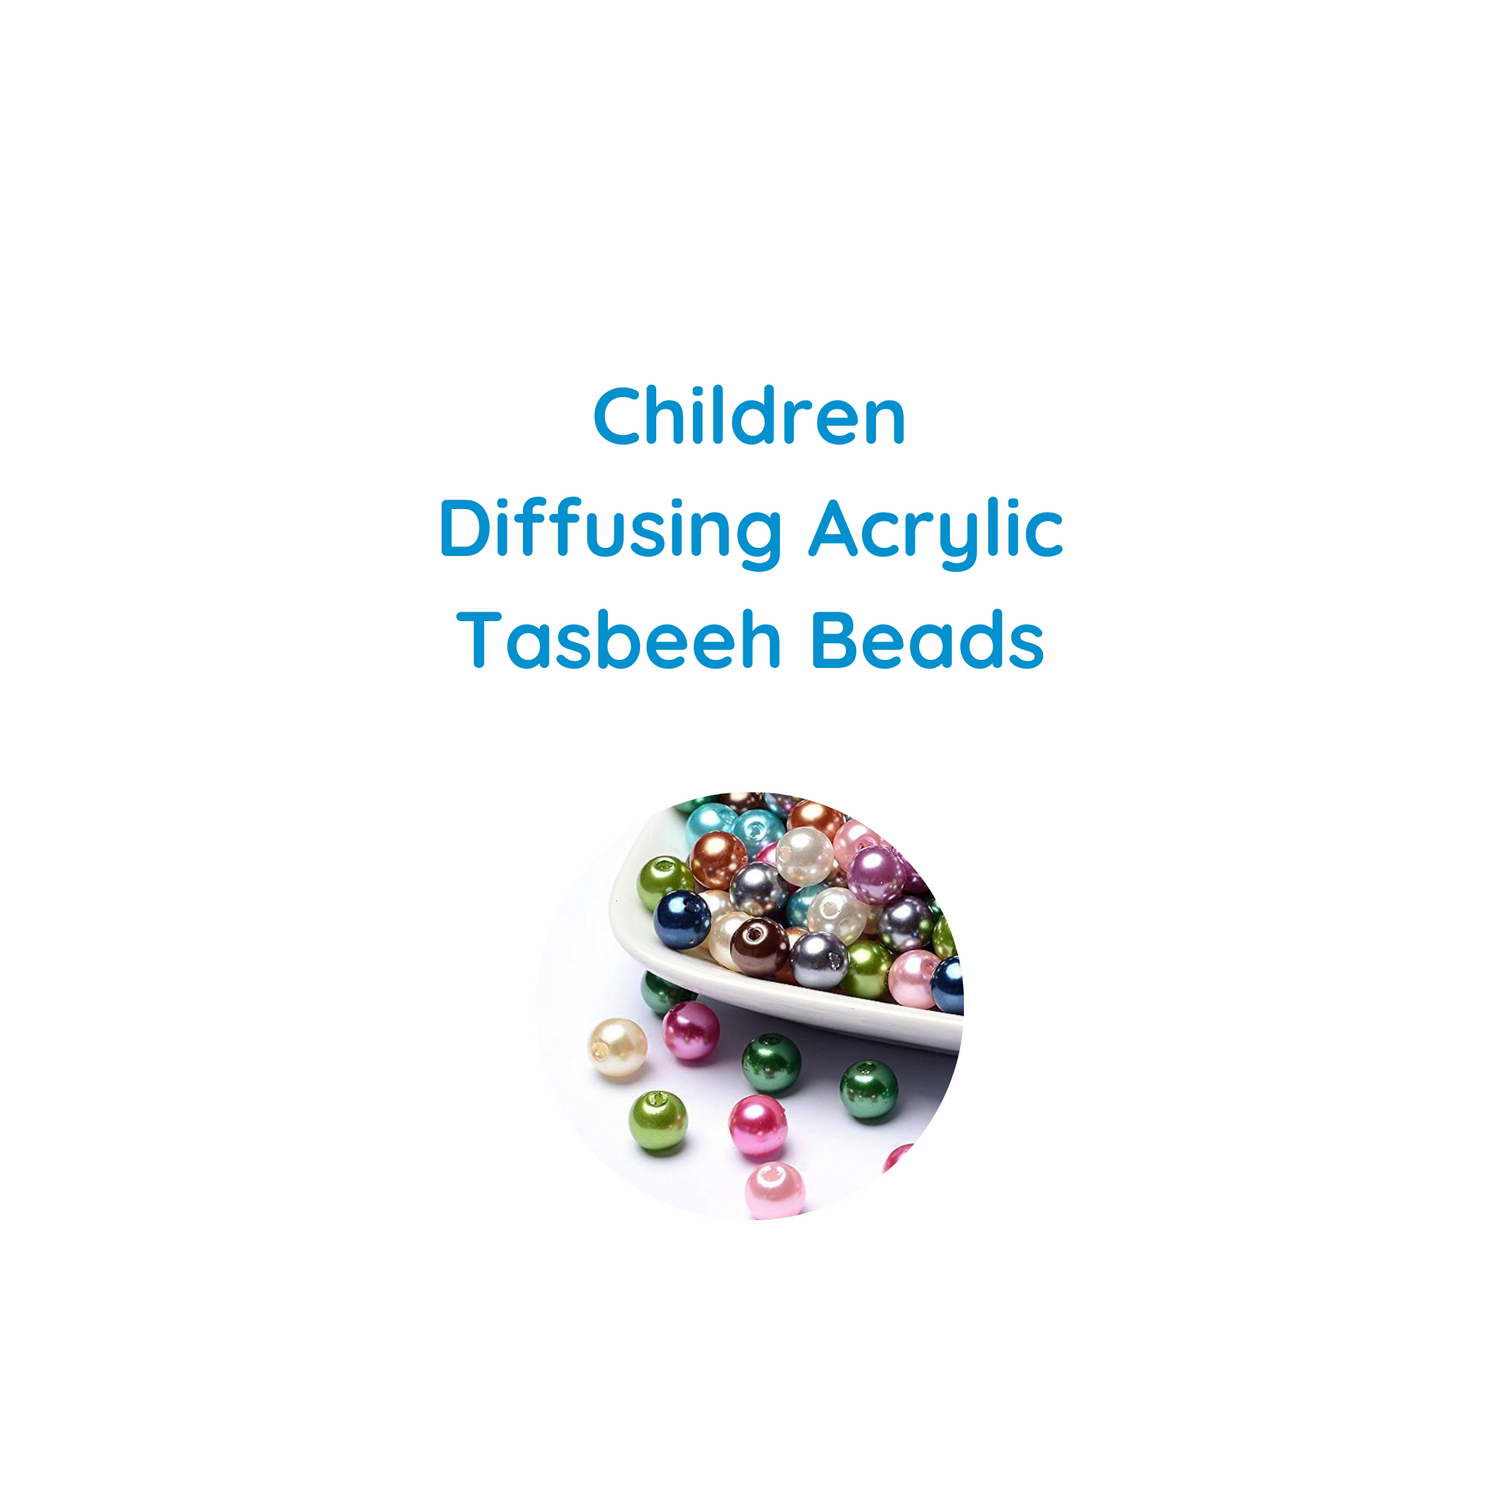 Children Diffusing Acrylic Tasbeeh Beads